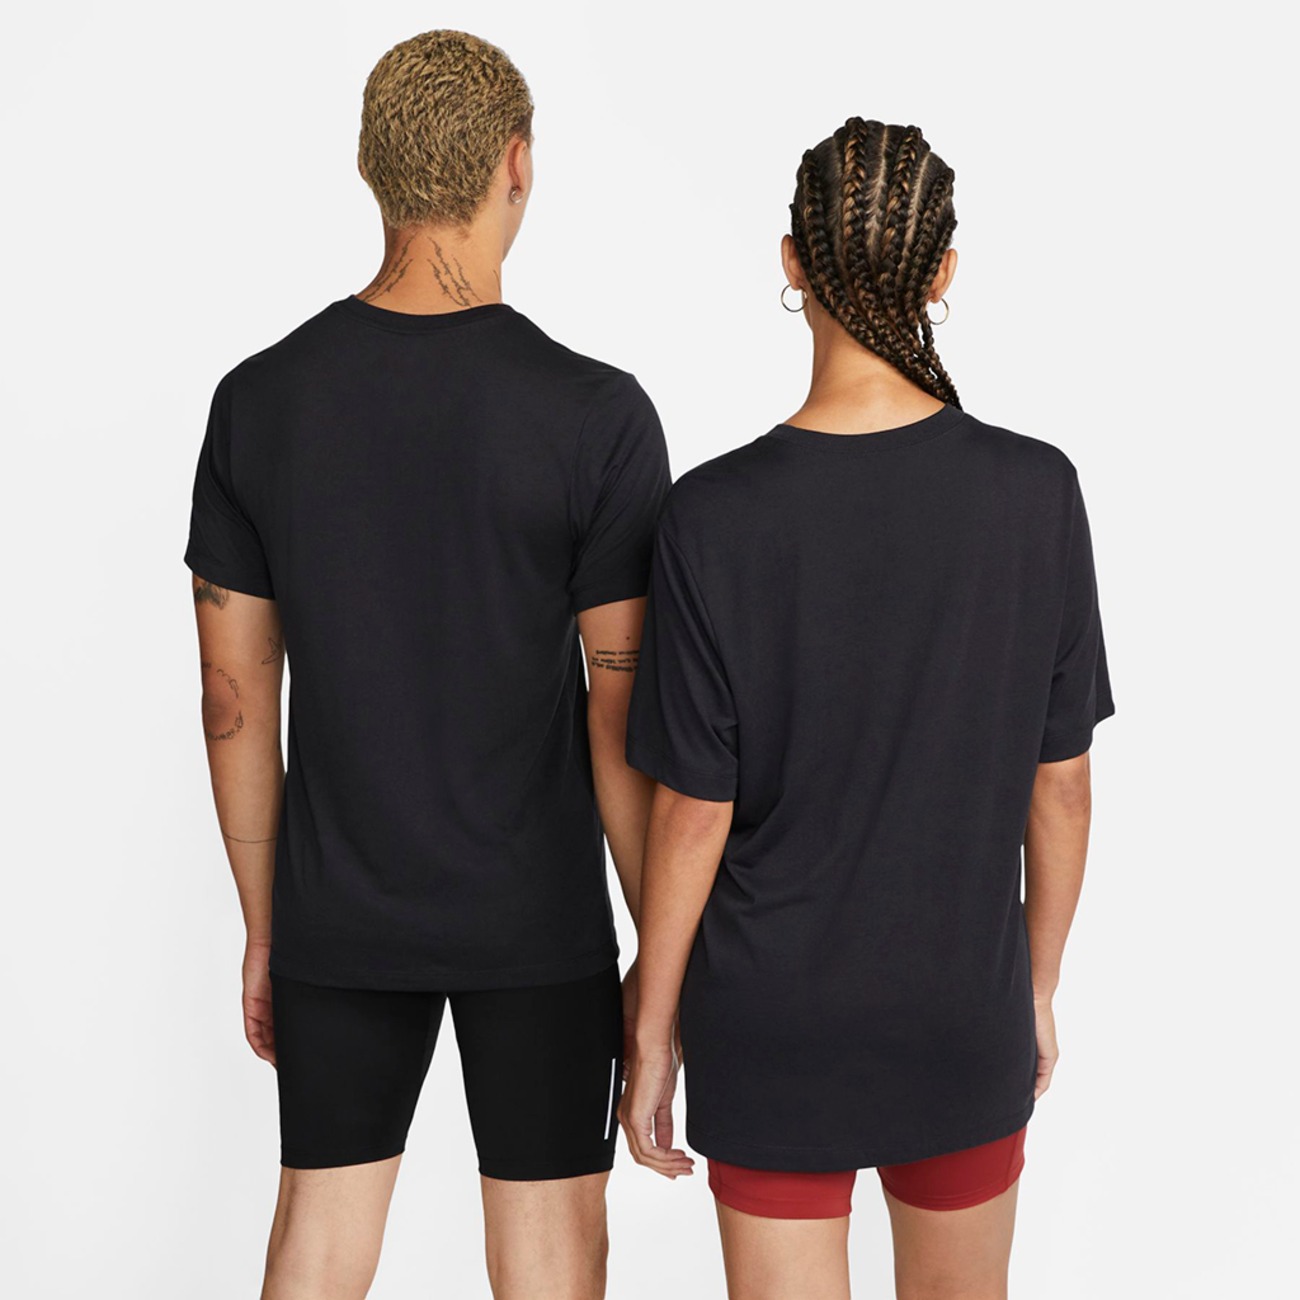 Camiseta Nike Dri-FIT Masculina - Foto 2